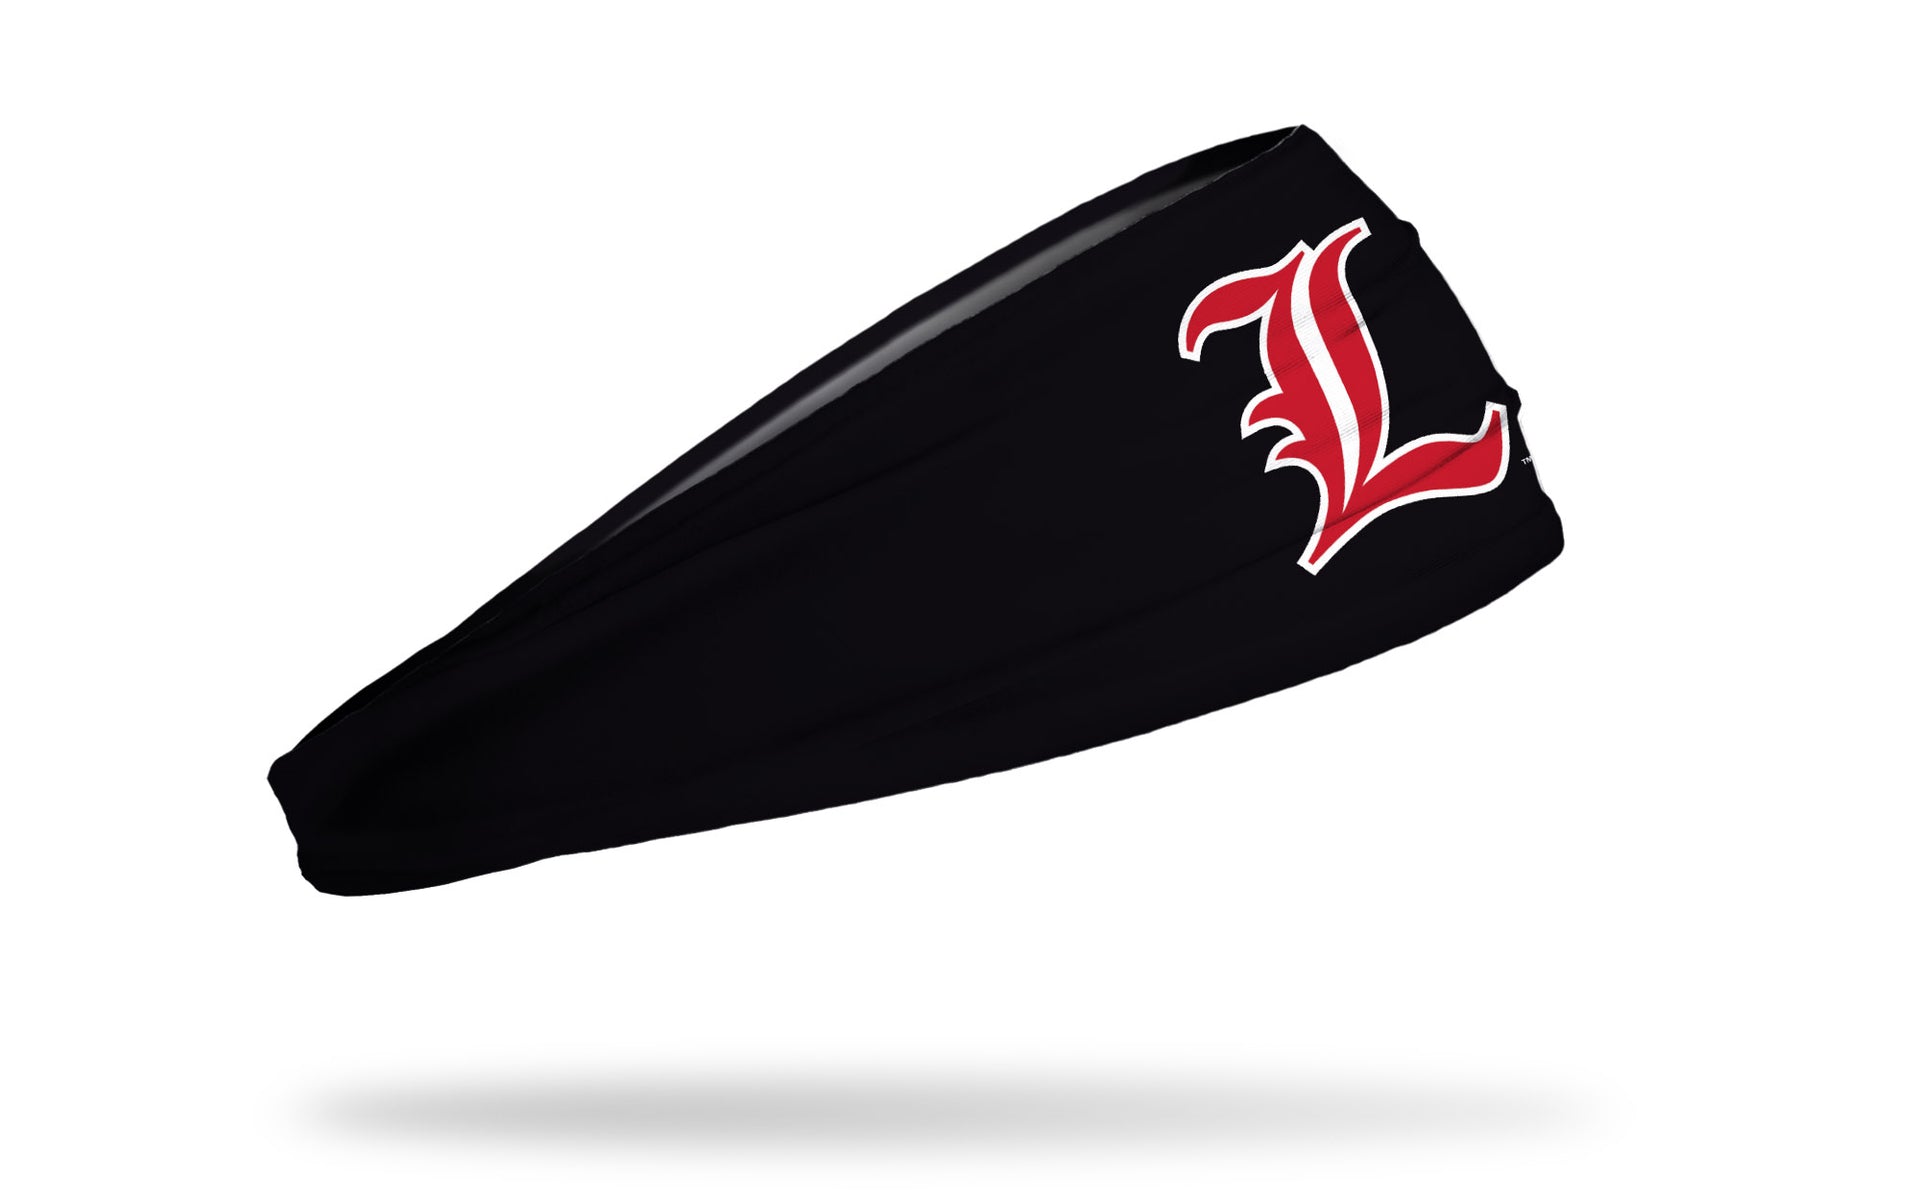 black headband with University of Louisville baseball logo in red